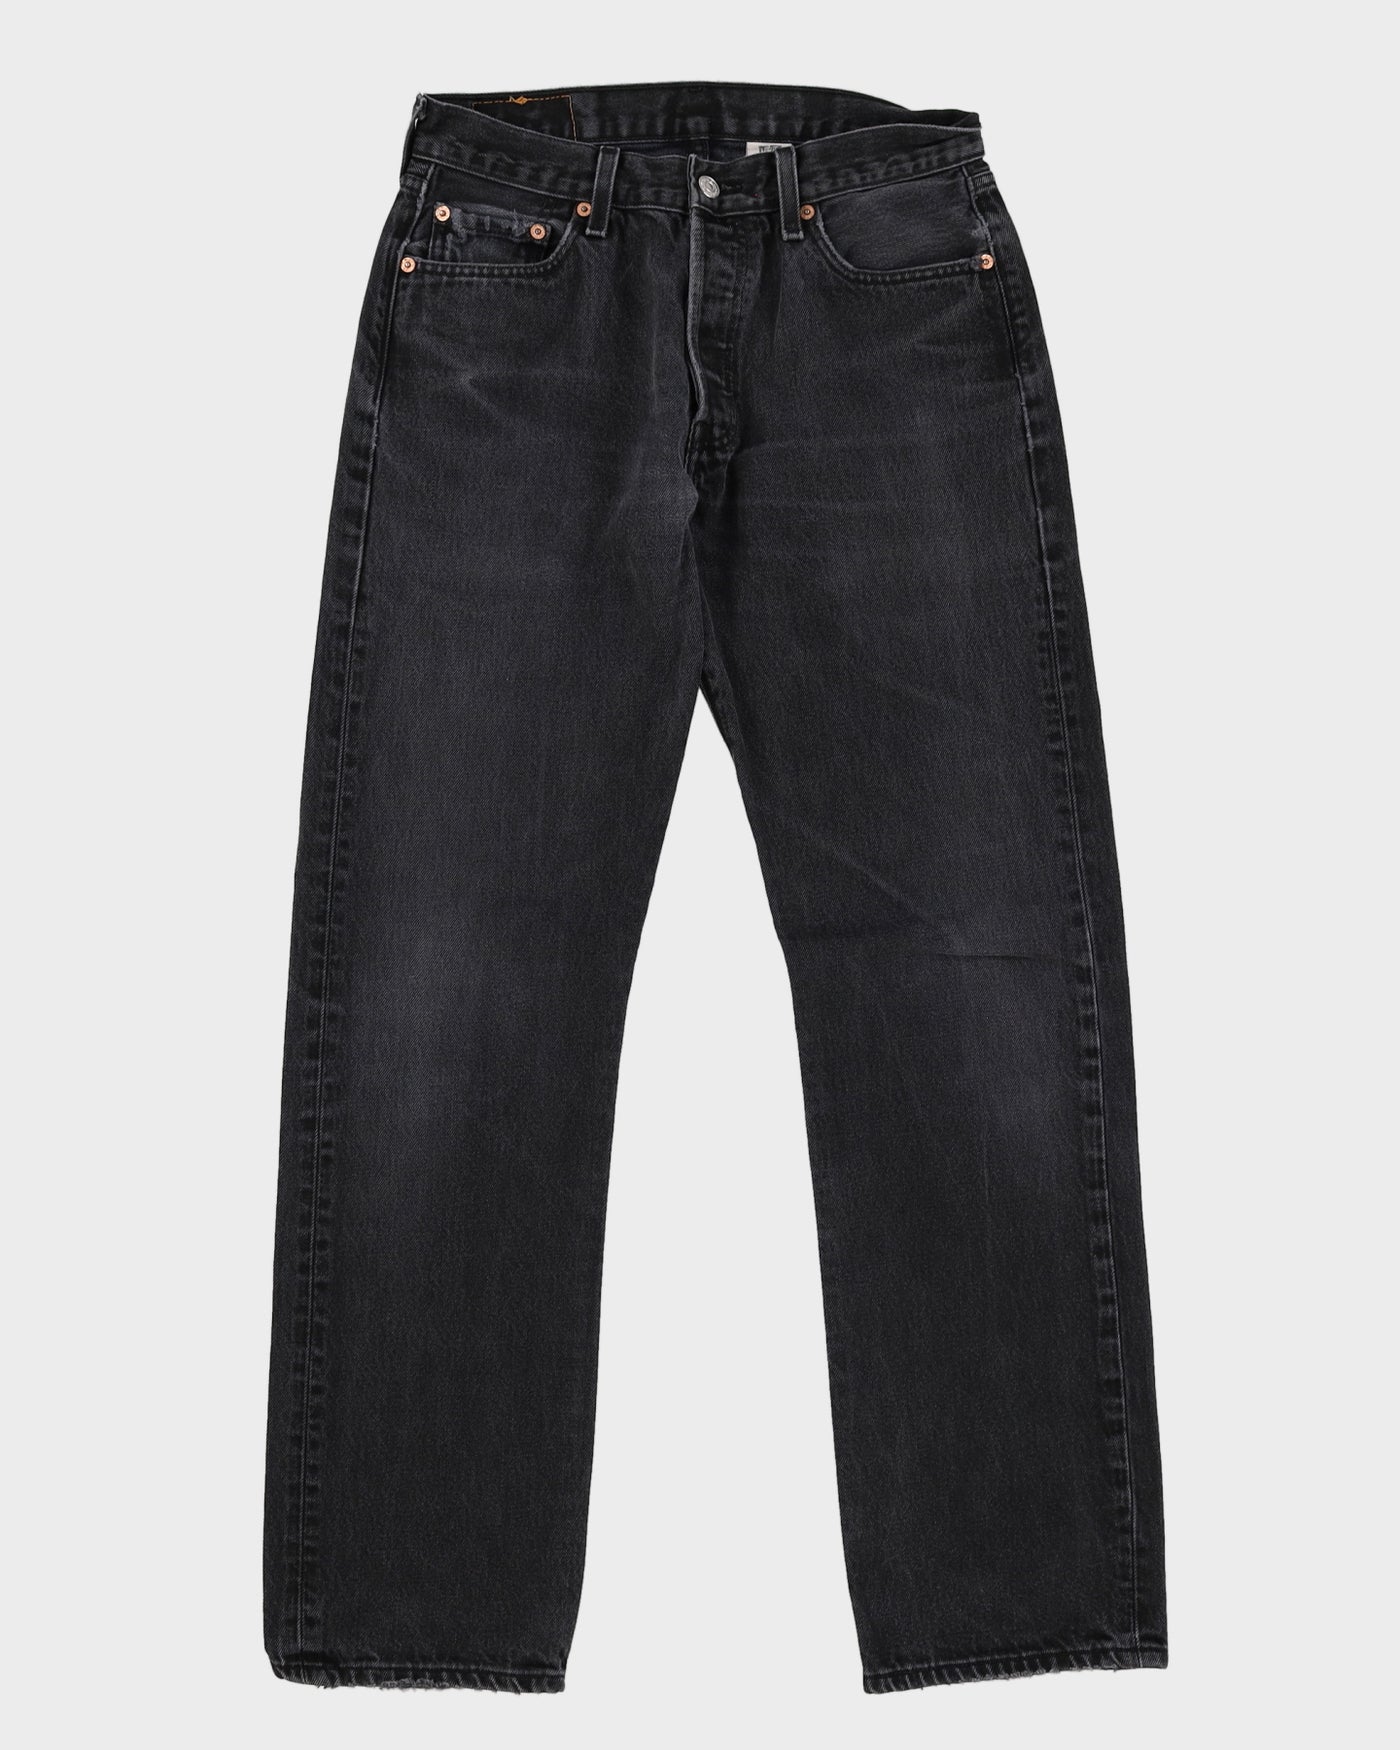 Vintage 90s Levi's 501 Dark Wash Black Jeans - W29 L31